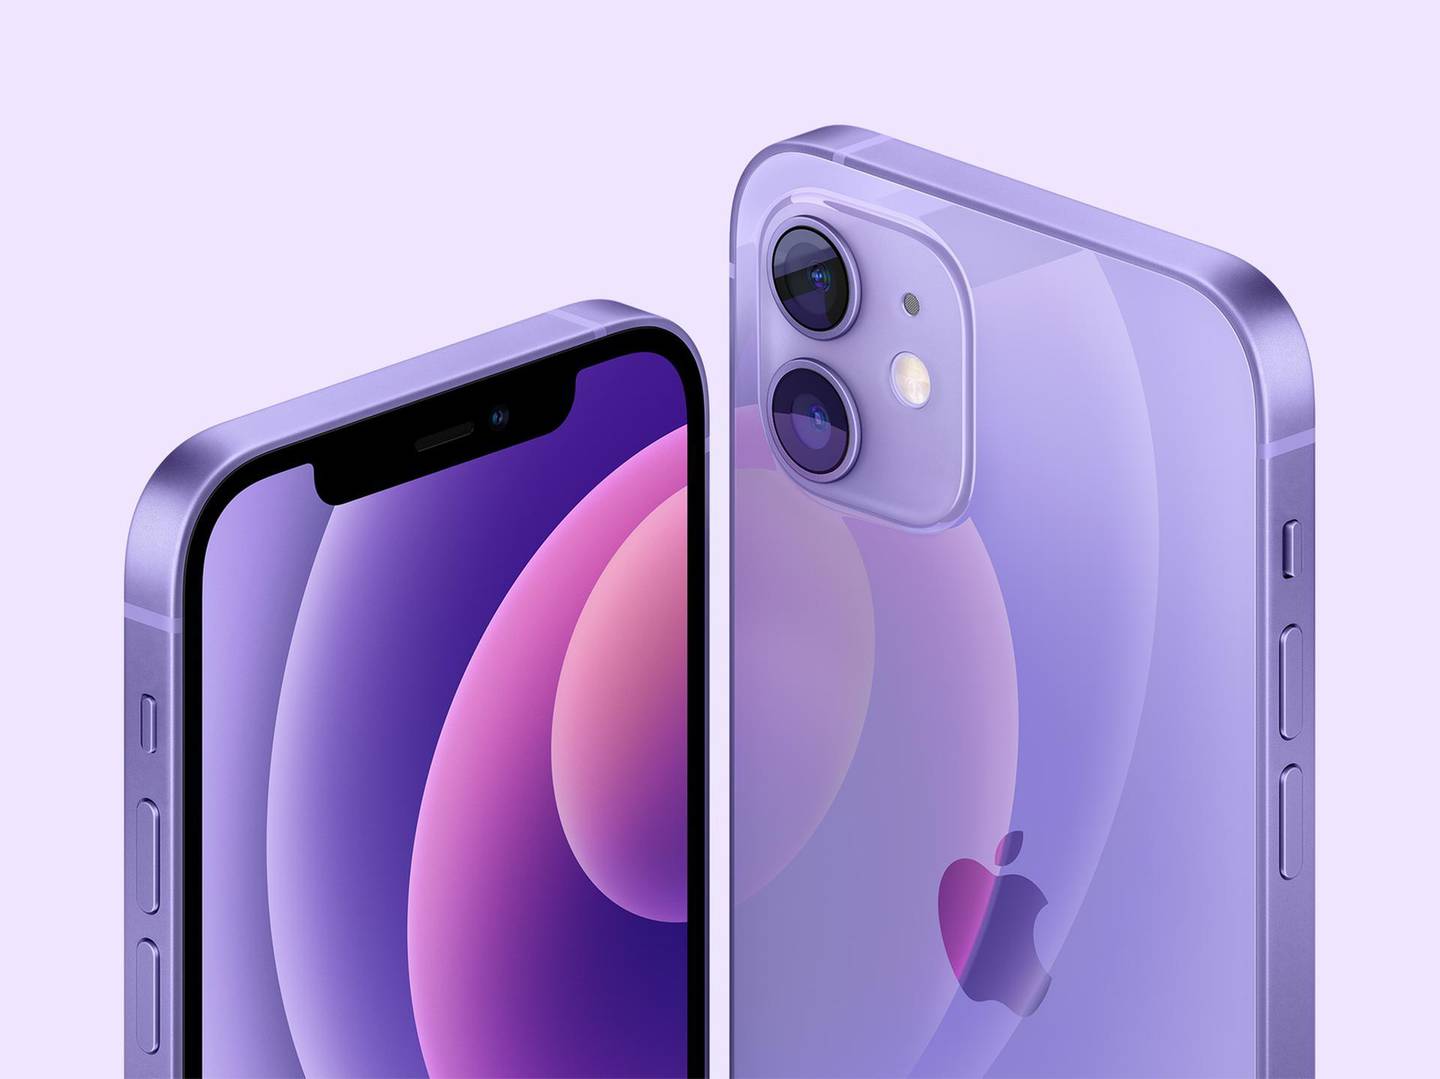 The purple finish on iPhone 12 and iPhone 12 mini. Courtesy Apple